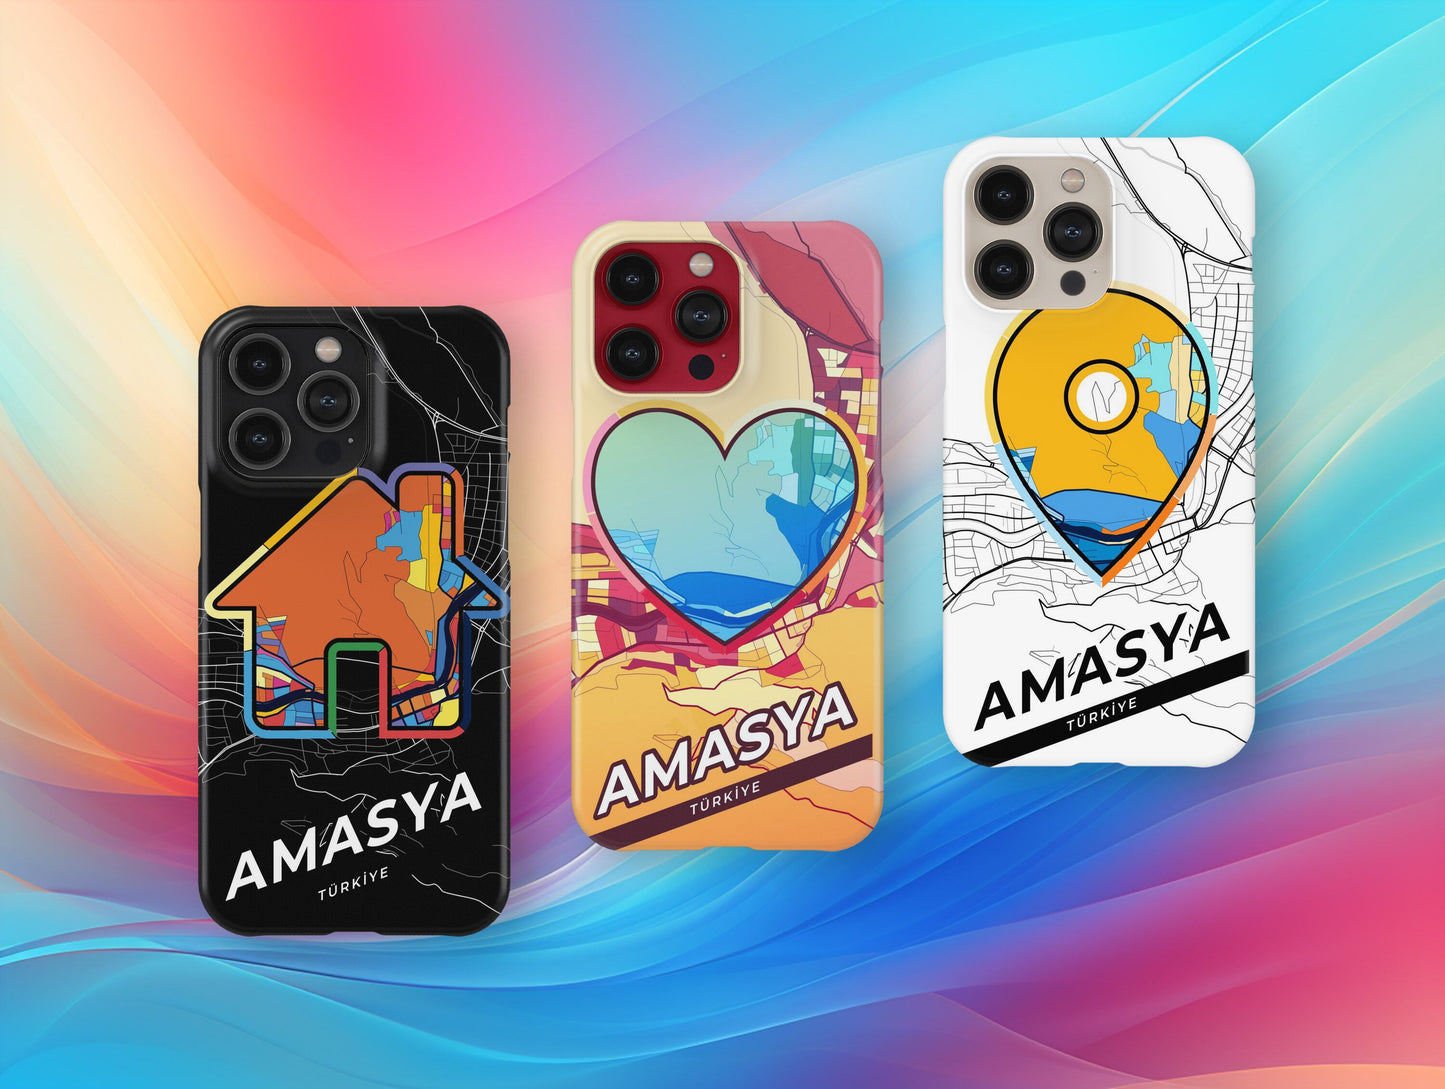 Amasya Turkey slim phone case with colorful icon. Birthday, wedding or housewarming gift. Couple match cases.